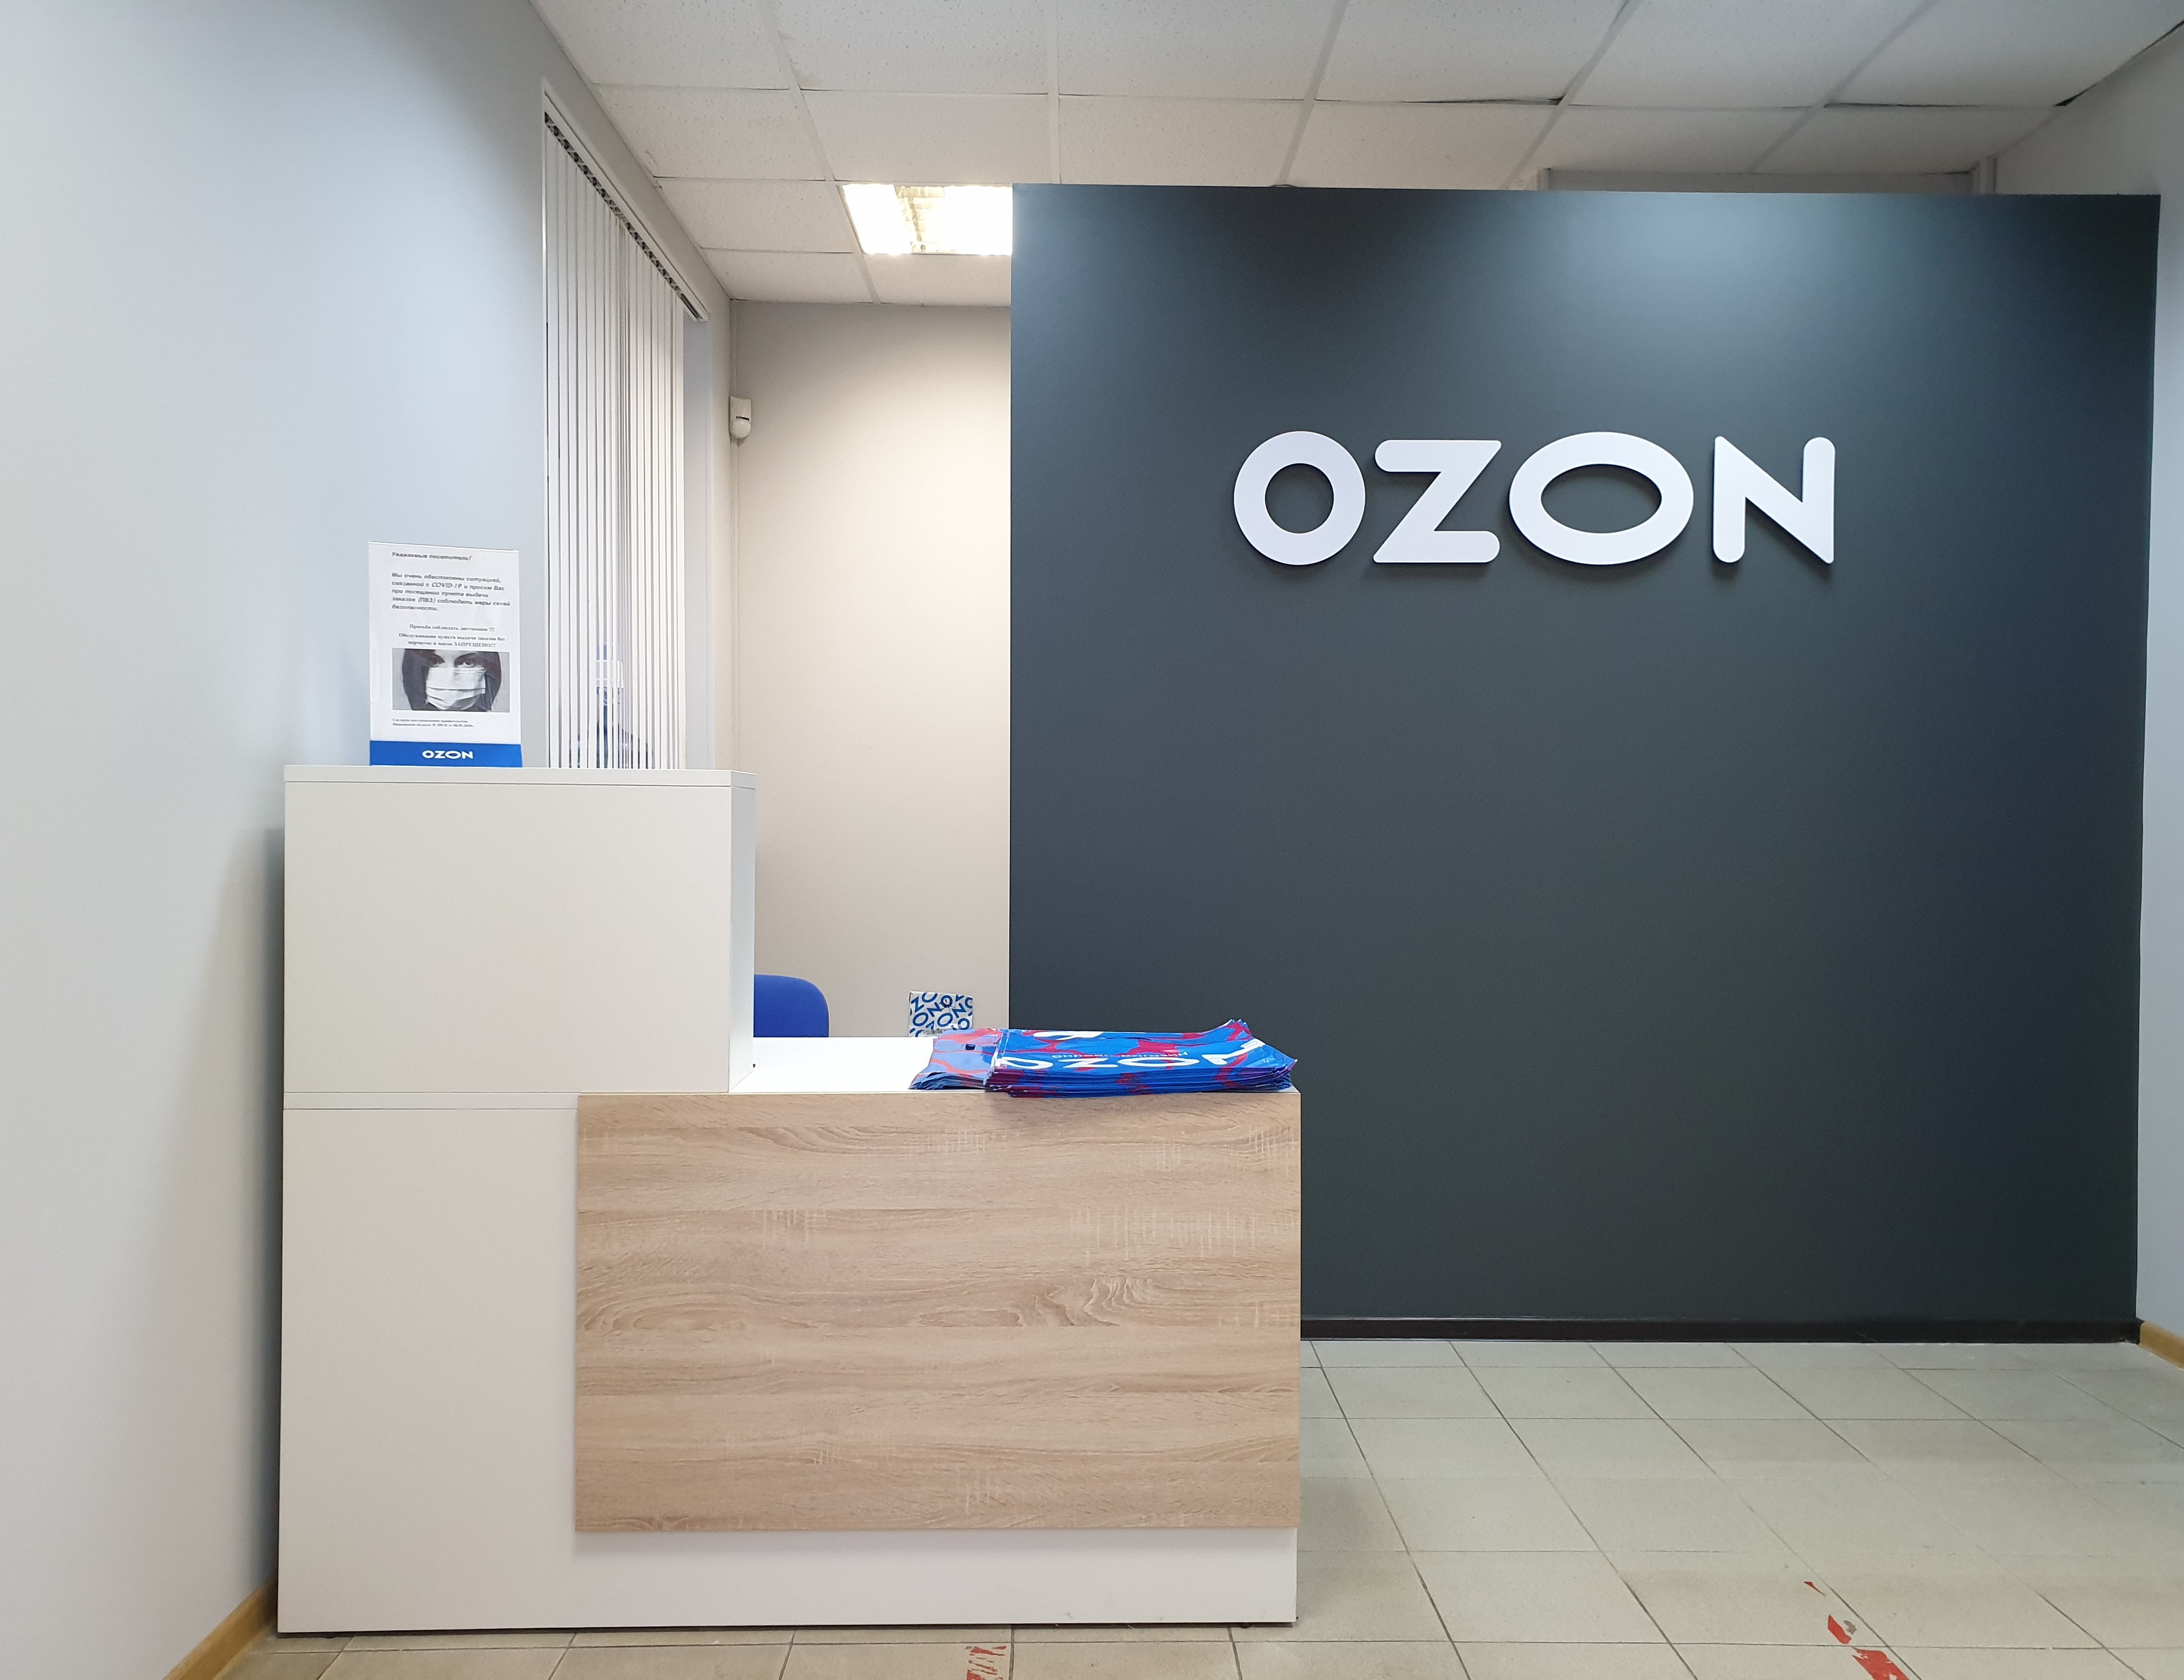 См озон интернет магазин. Озон интернет-магазин. Озон пункты выдачи Иваново. Ozone интернет магазин. OZON Маркет.